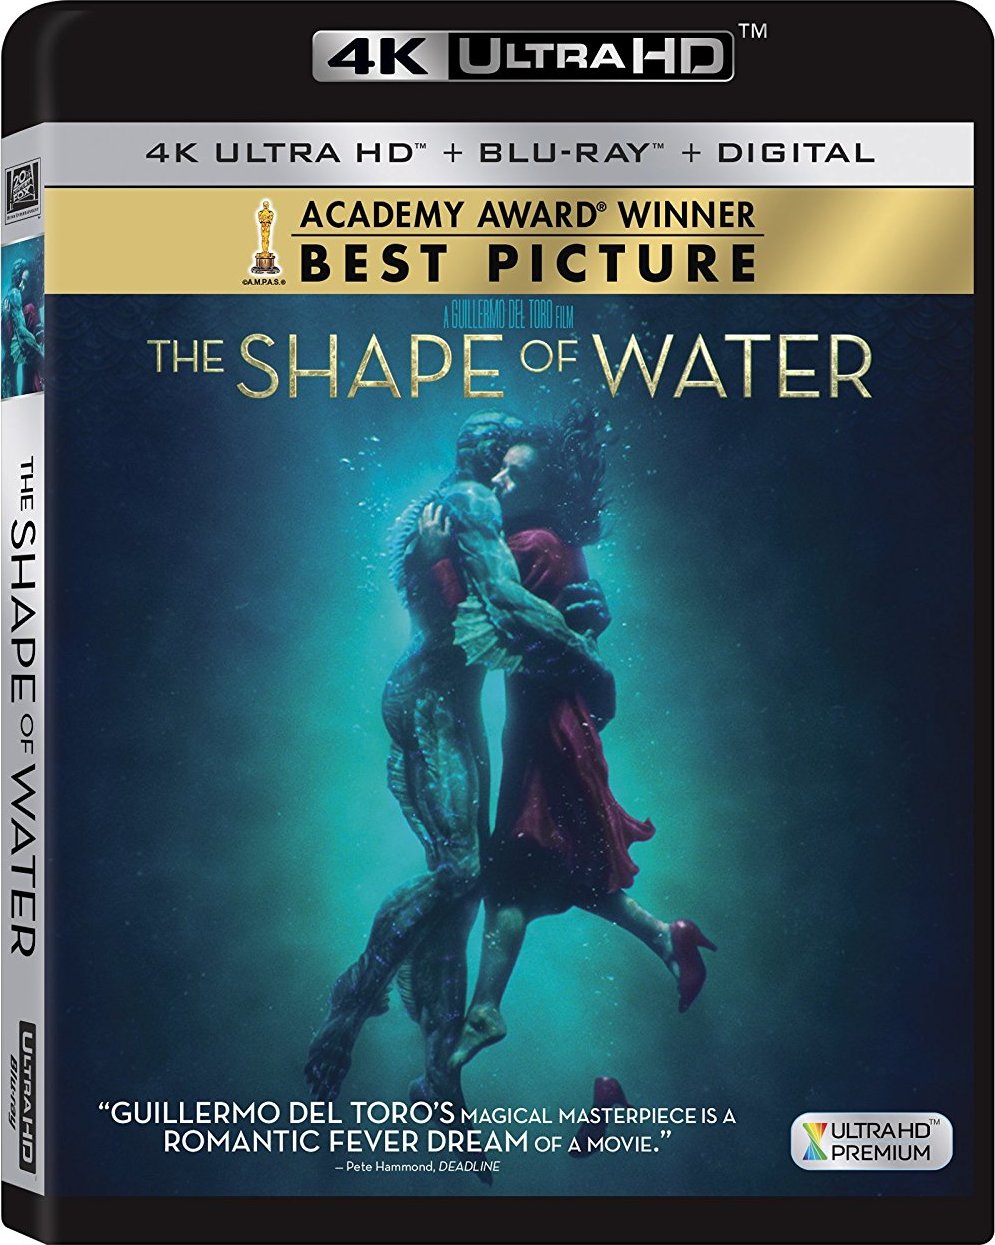 [水形物语].The.Shape.of.Water.2017.UHD.BluRay.2160p.HEVC.DTS-HD.MA.5.1-COASTER   57.31G-1.jpg